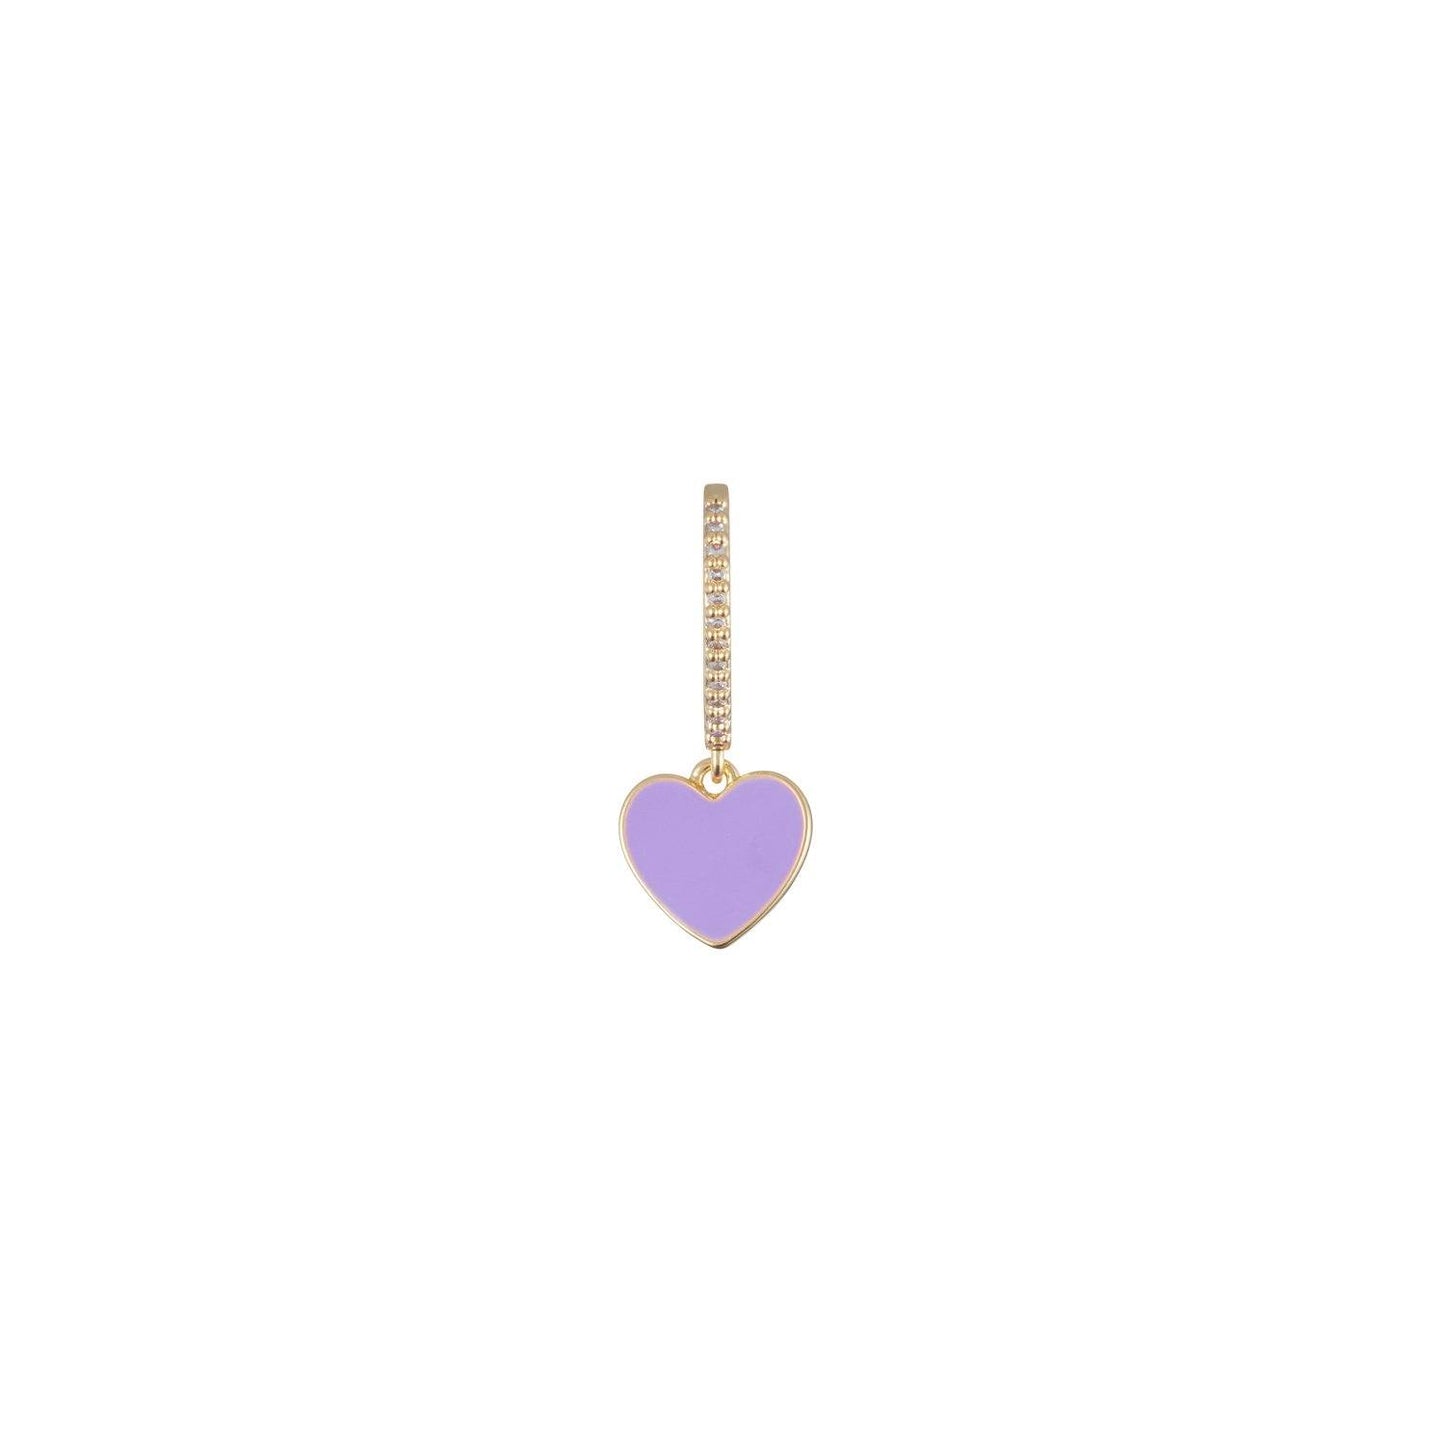 Purple enamel heart shaped pendant with clear stone embellishments 